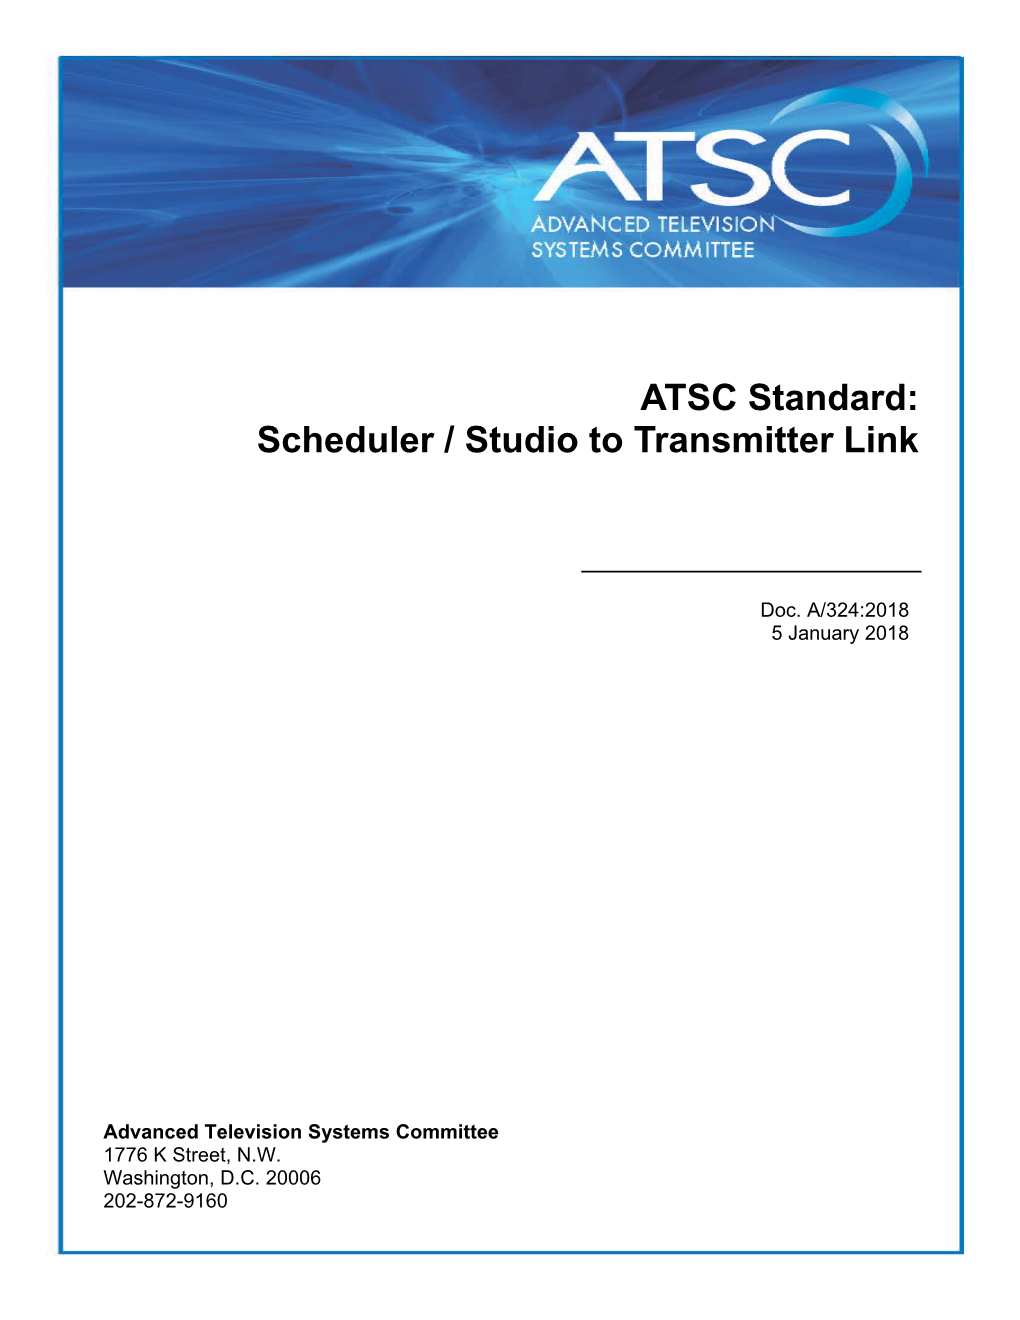 A/324, "Scheduler / Studio-To-Transmitter Link"